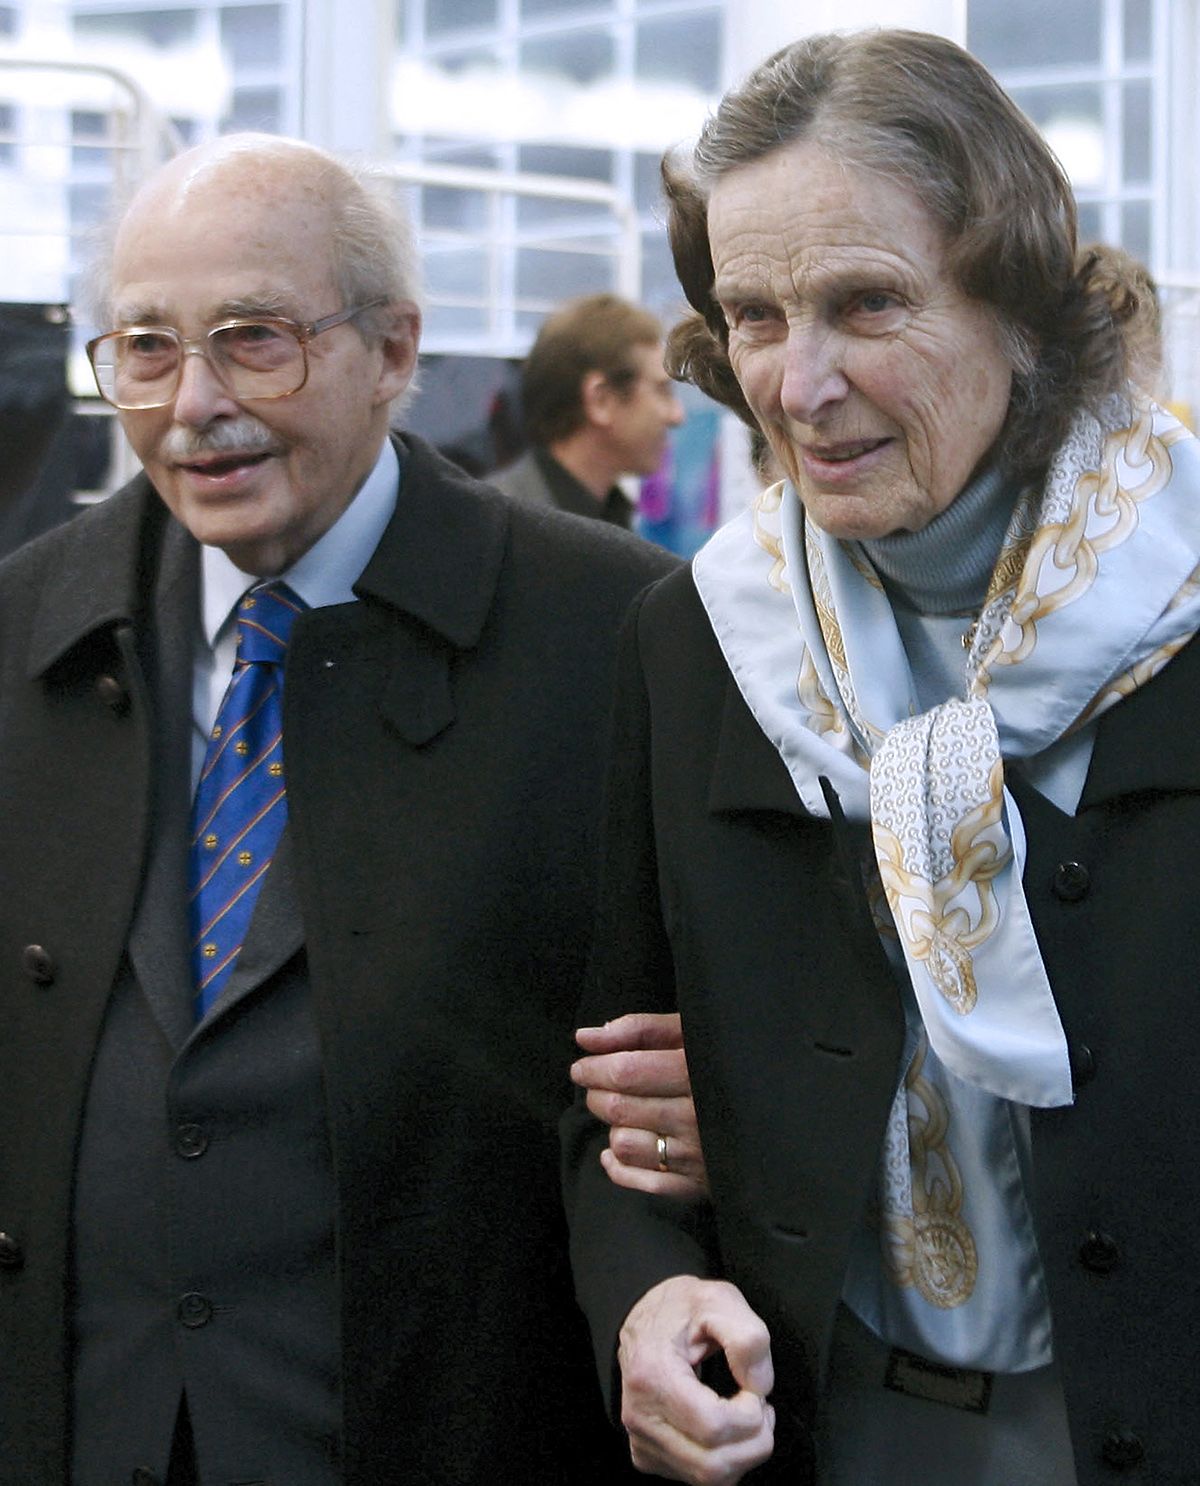 FRANCE-AUSTRIA-HUNGARY-PEOPLE-ROYALS
Hasburg Otto és felesége Regina